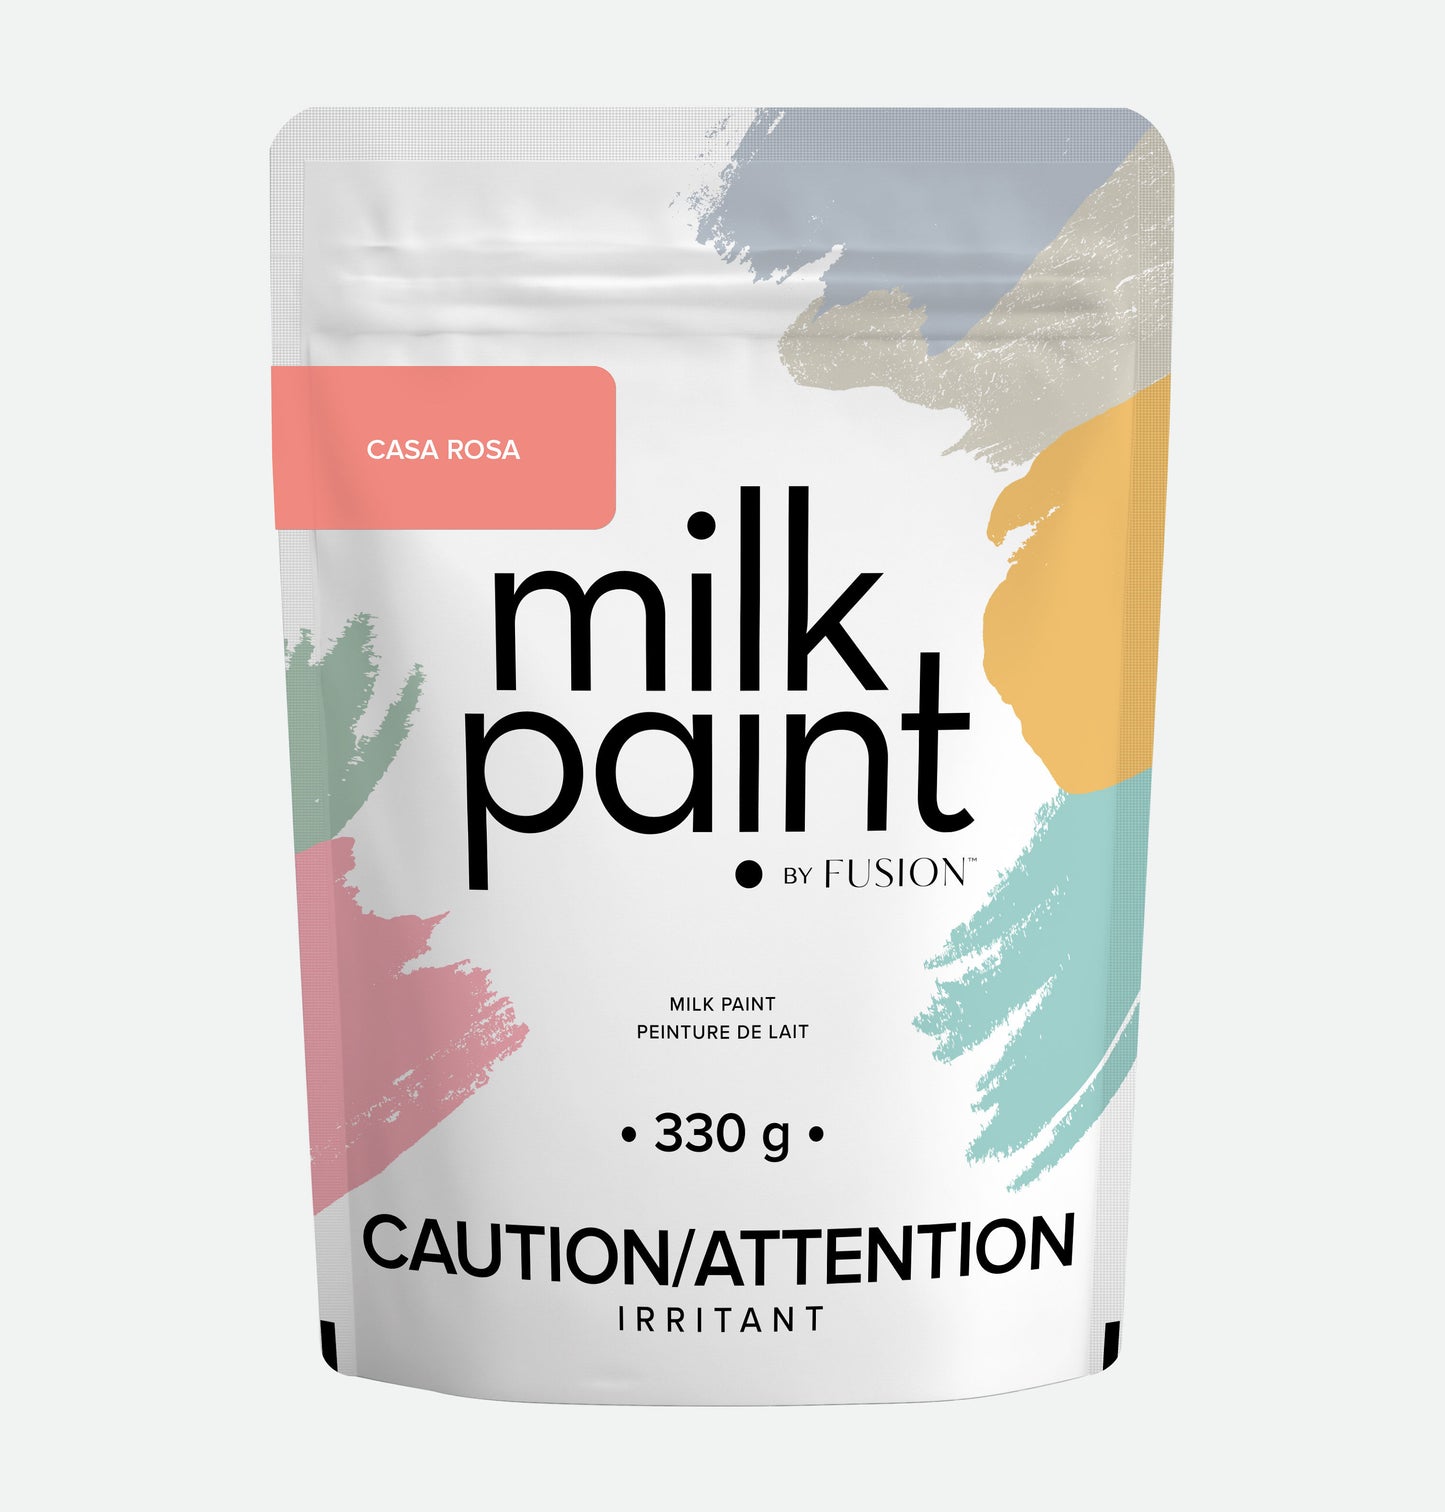 Fusion Milk Paint CASA ROSA